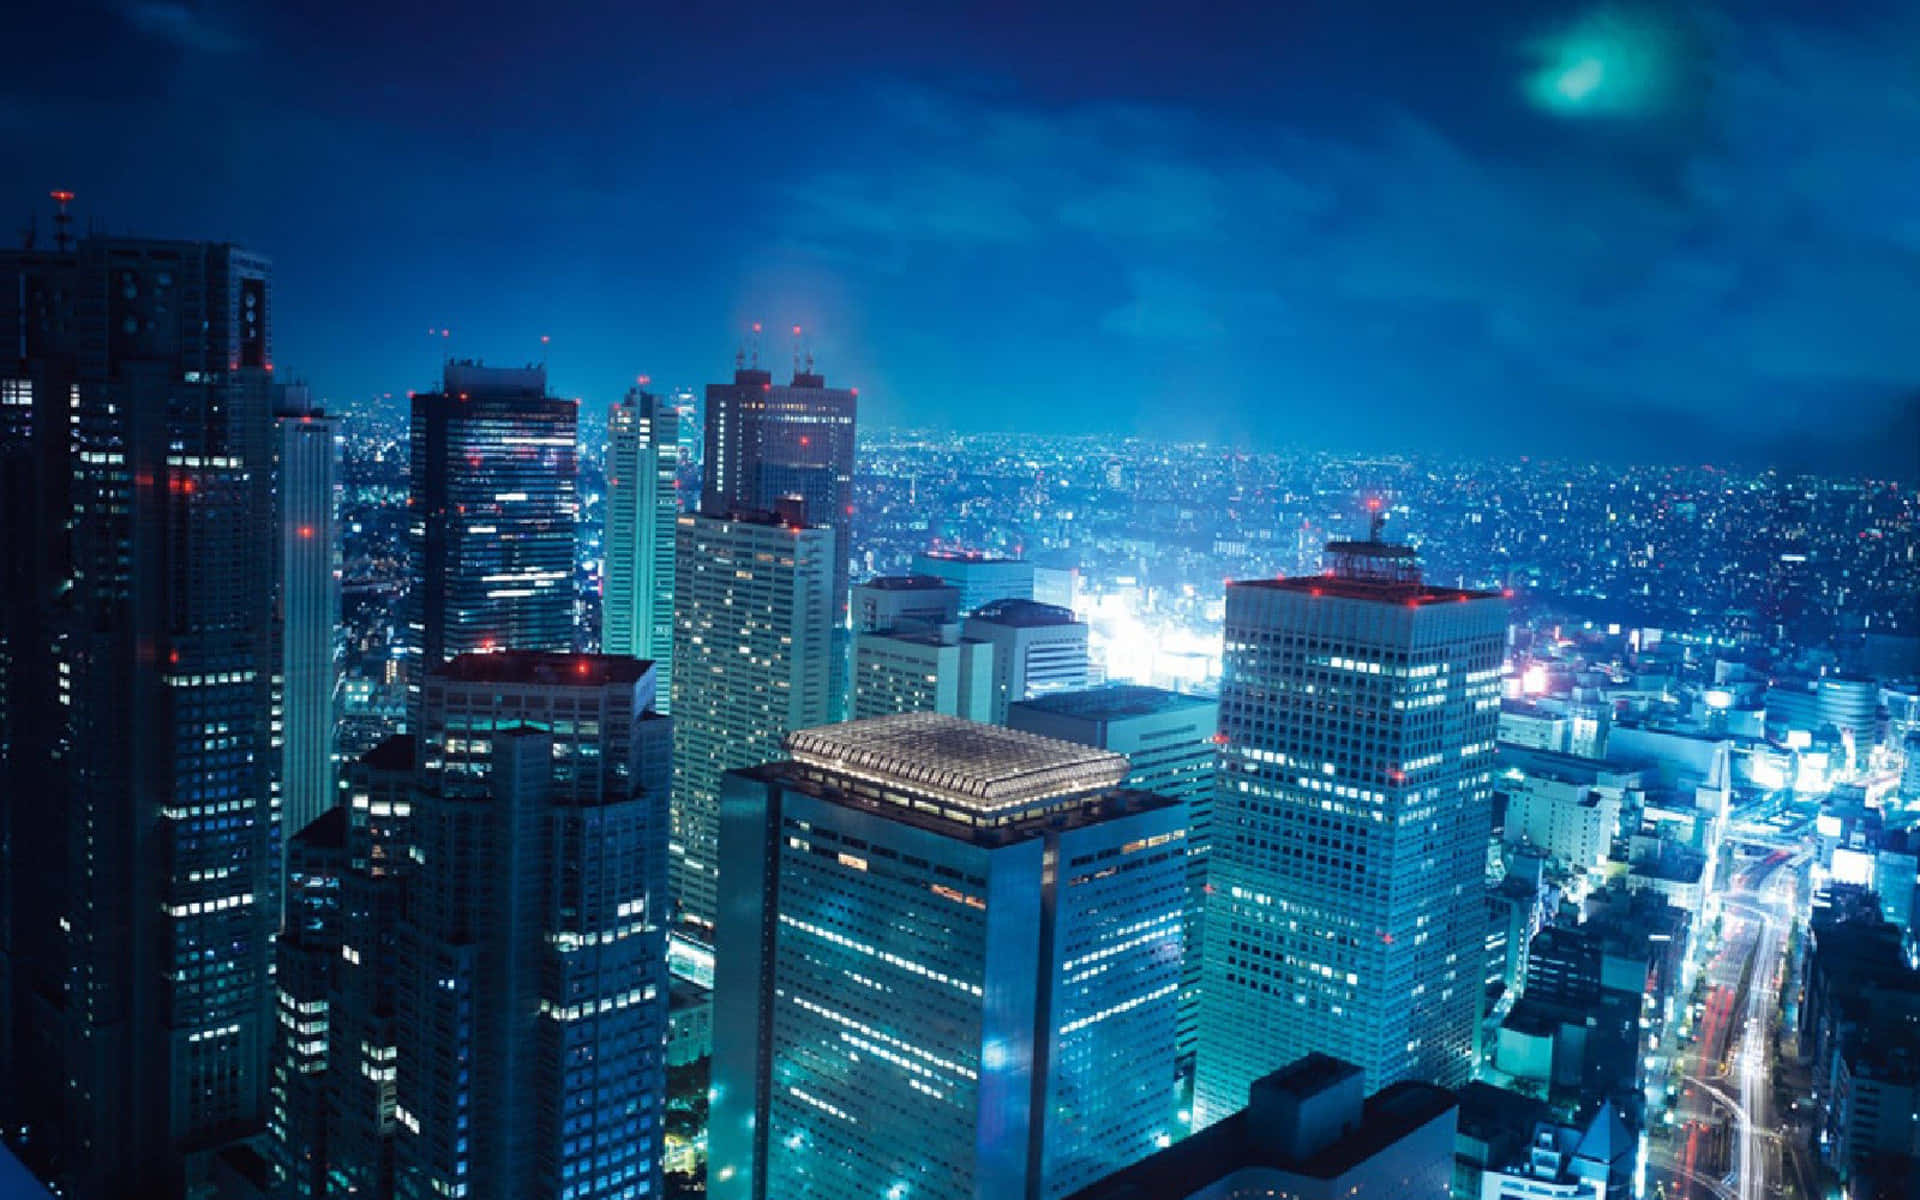 Tokyobaggrund Med Lys Blå Temaer I Byen.